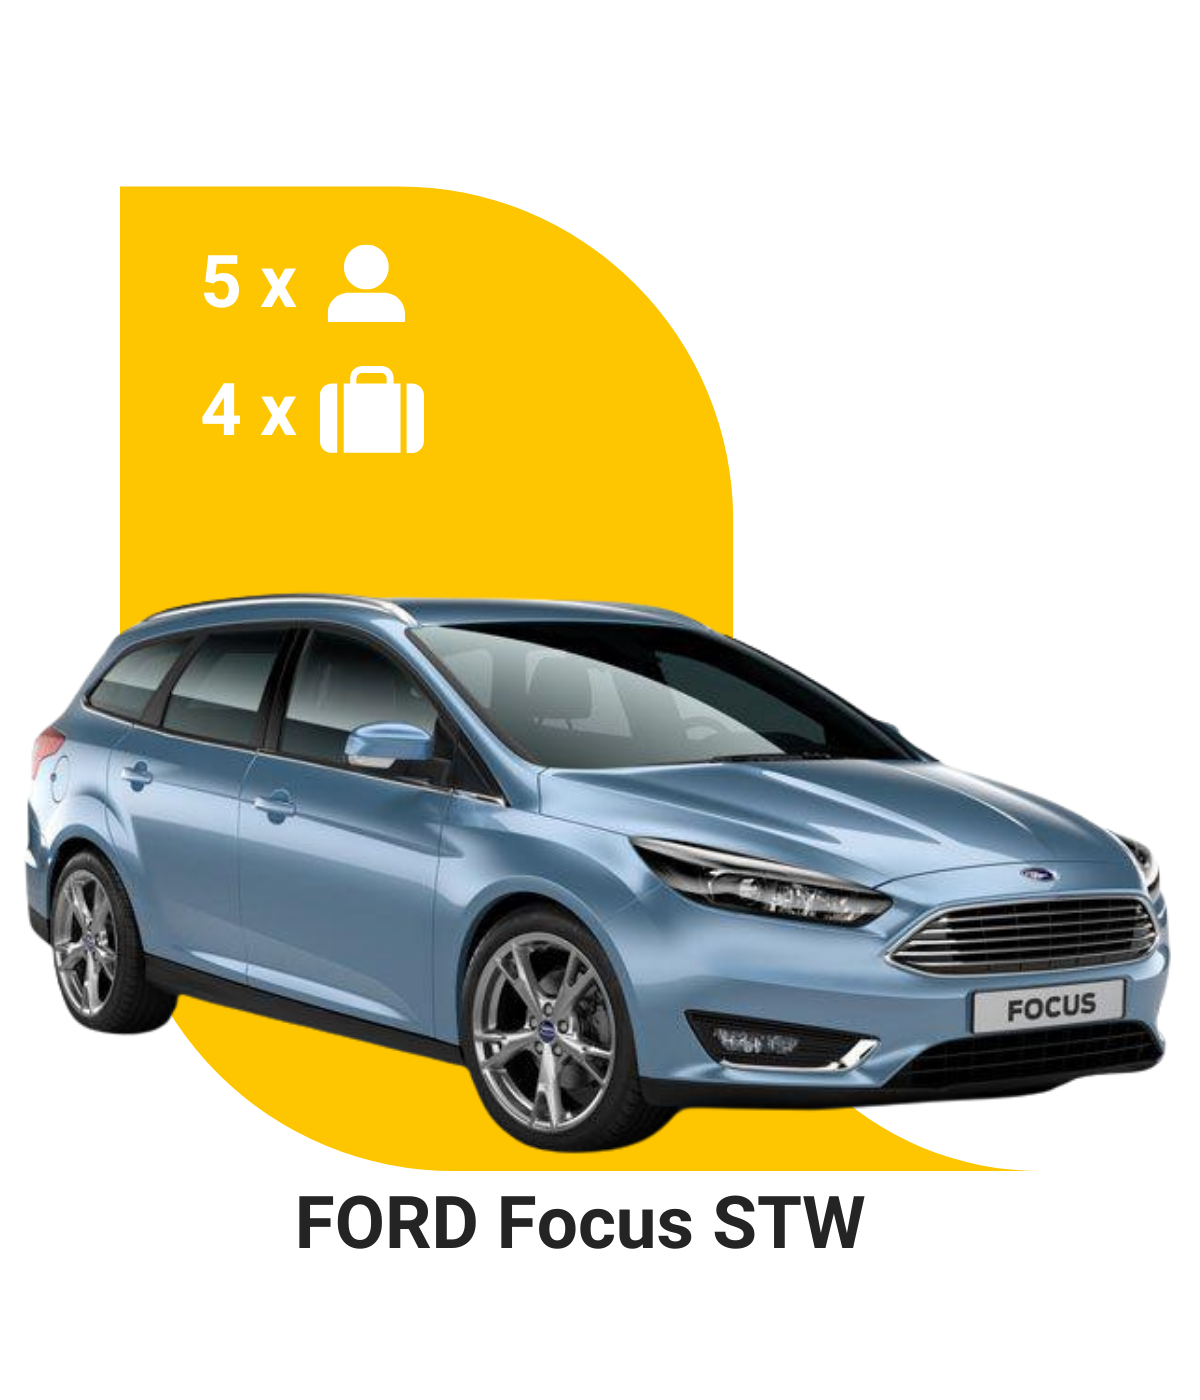 Ford Focus STW Car Rental